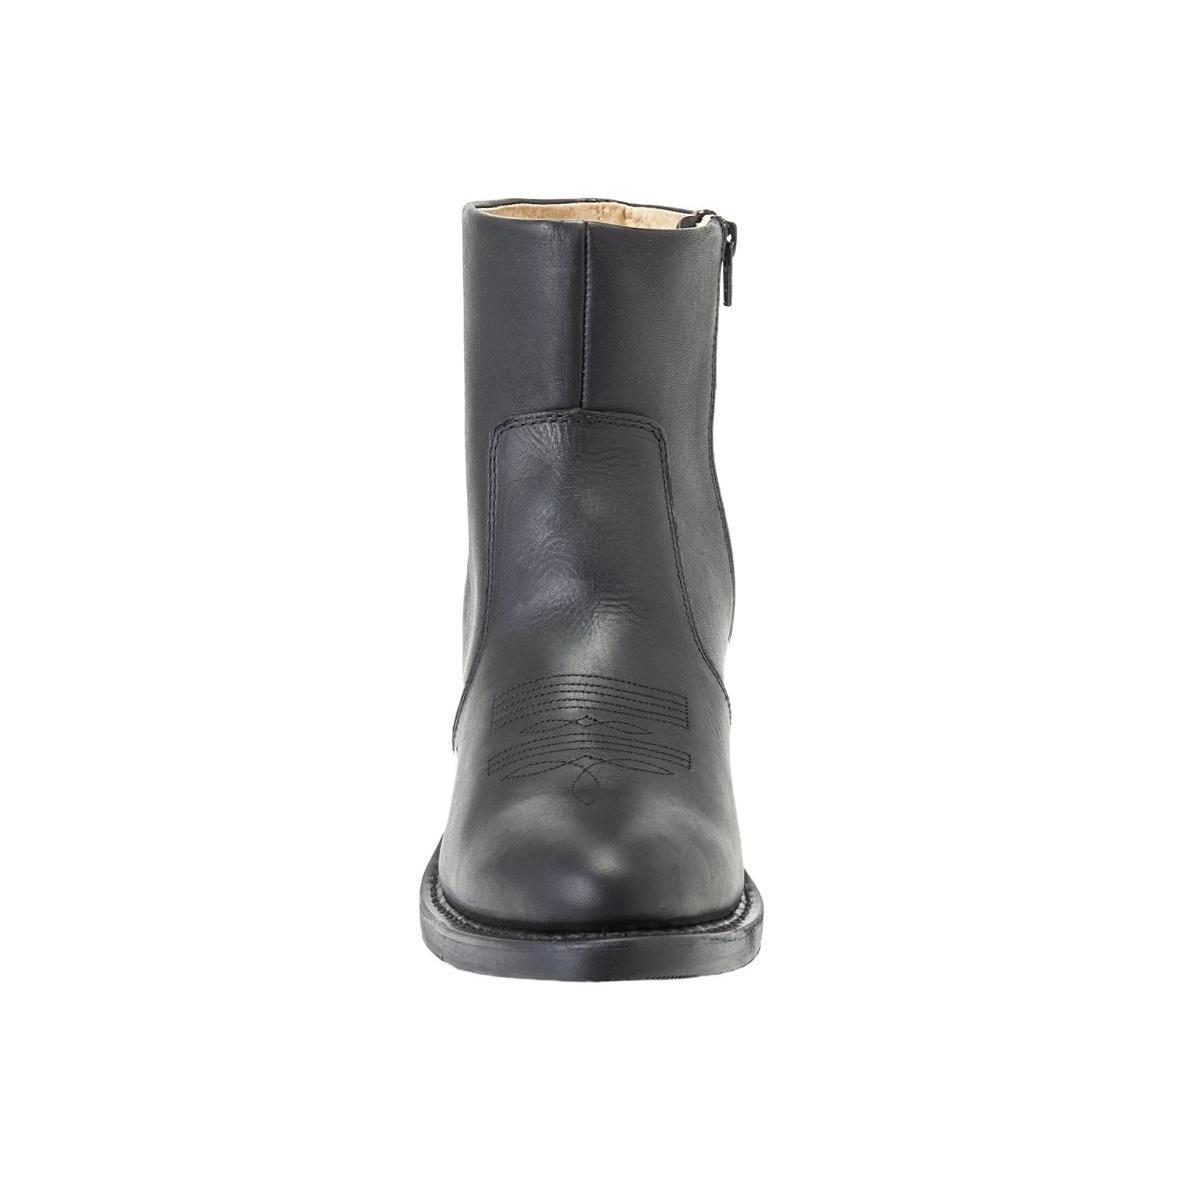 Durango Boot: Men's Black Leather 7-Inch Side Zip Boots